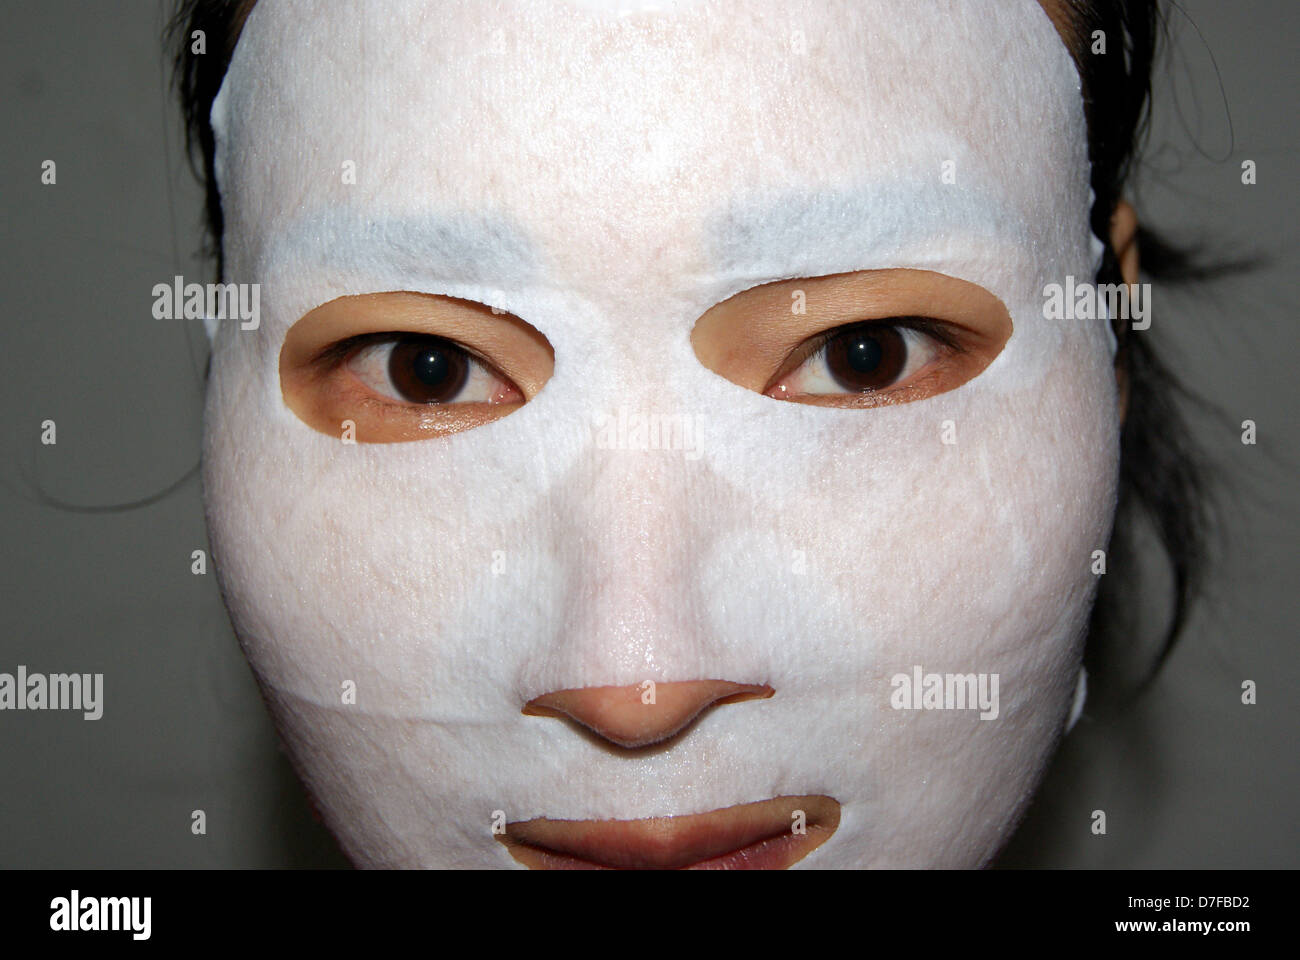 Asian woman with facial mask Stock Photo